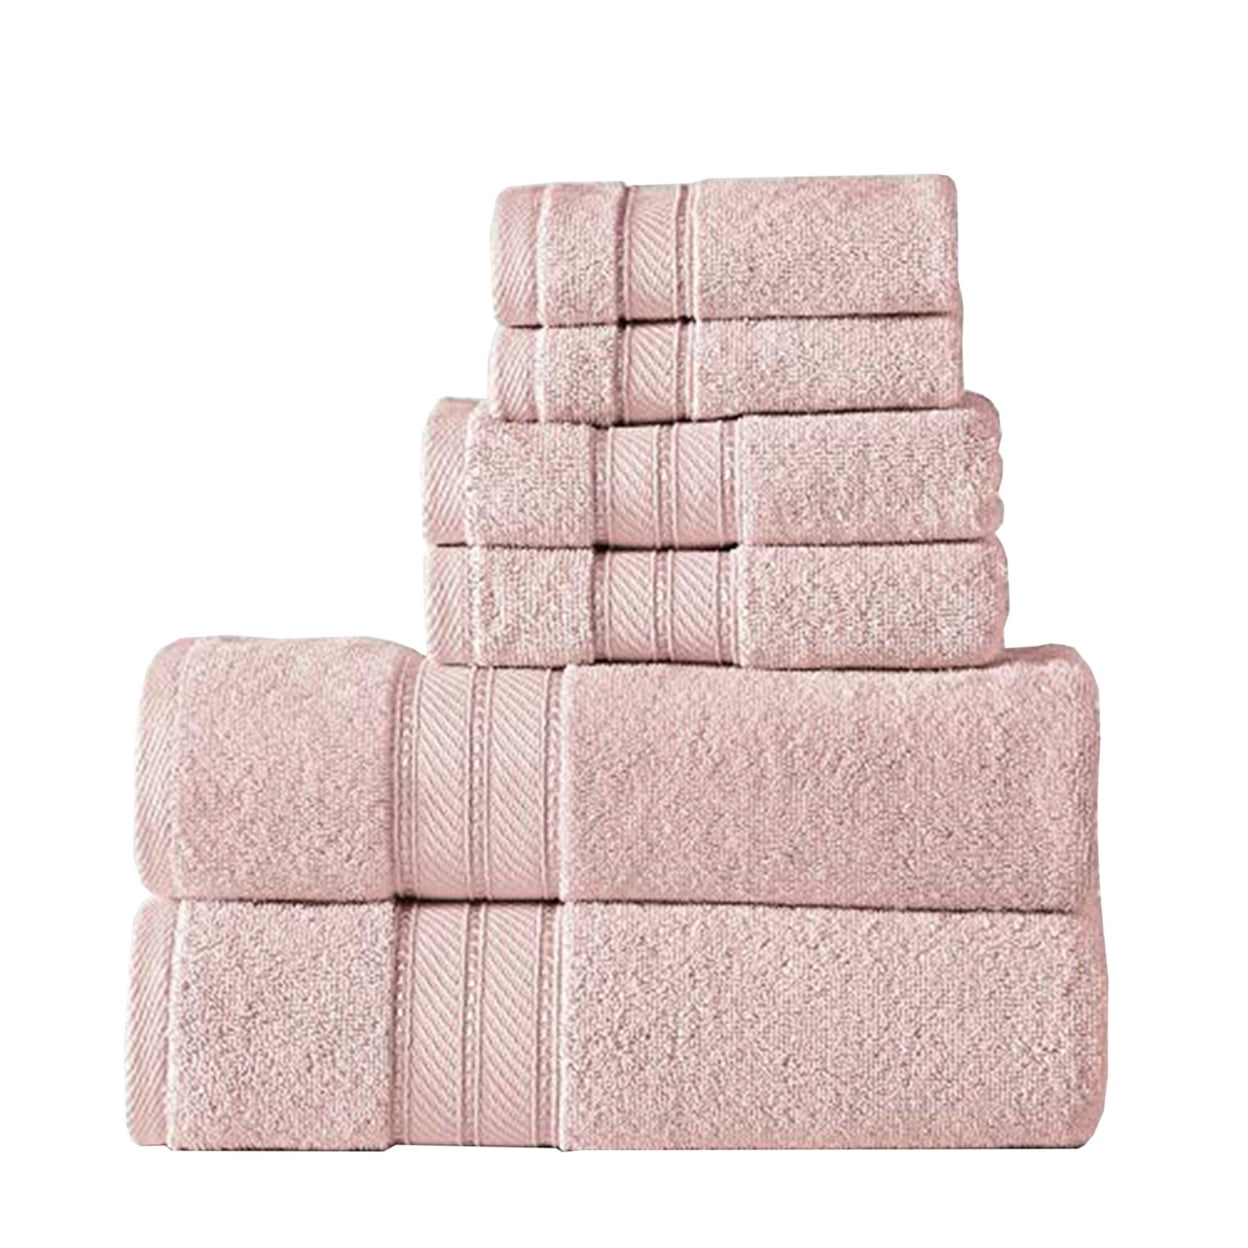 Picture of The Urban Port BM222882 Bergamo Spun Loft Towel Set with Twill Weaving, Pink - 6 Piece